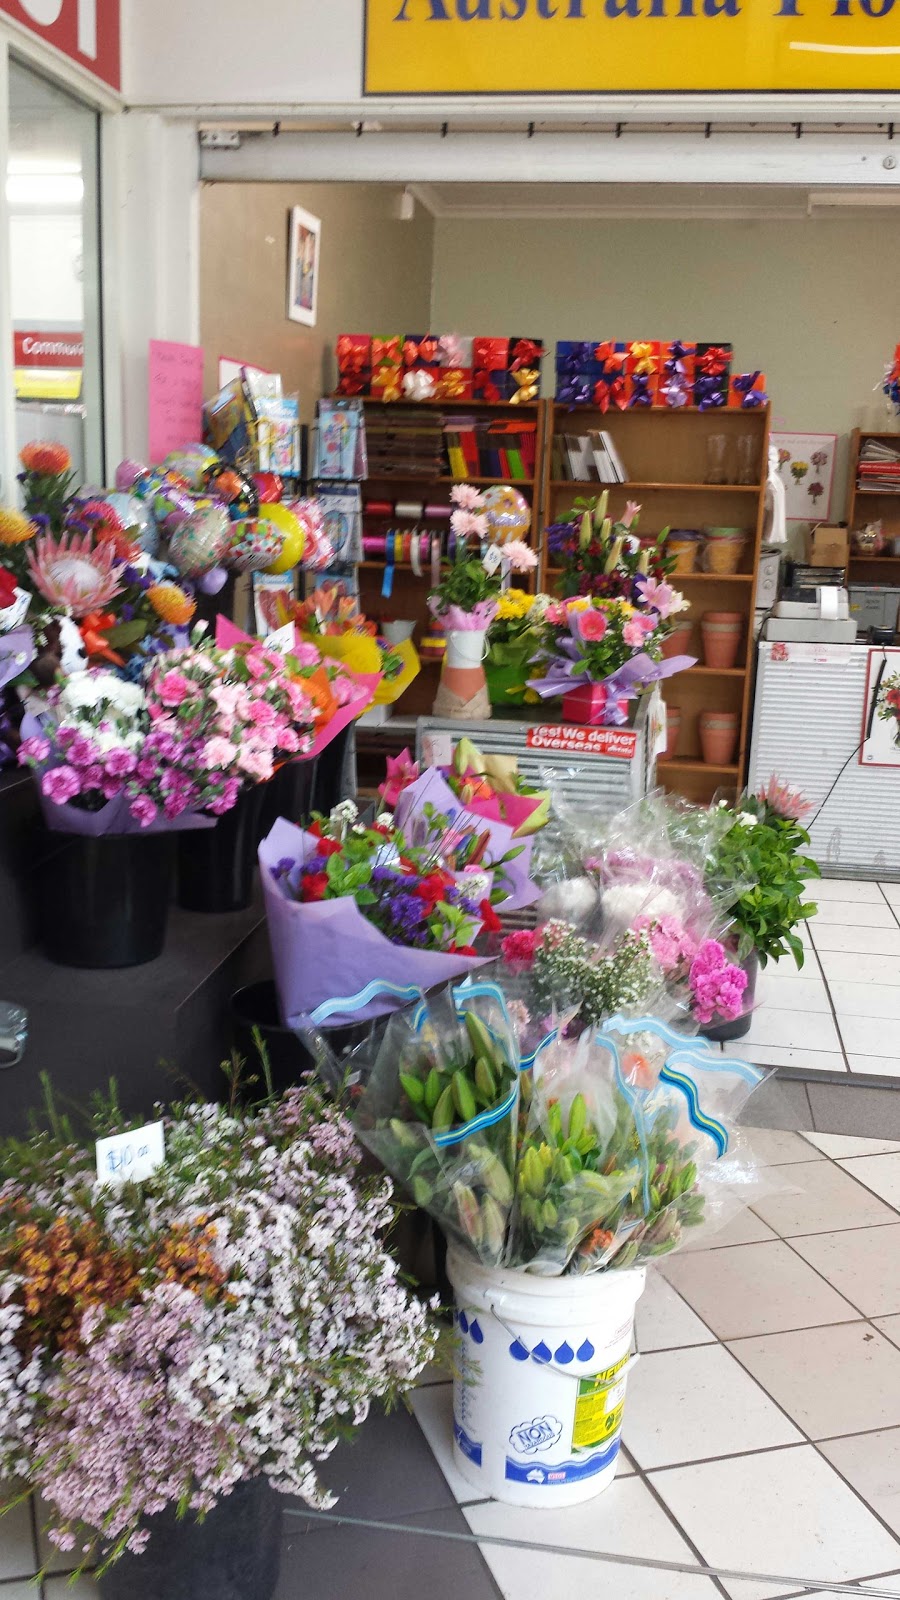 Westridge Florist | shop 17/300 West St, Toowoomba City QLD 4350, Australia | Phone: (07) 4687 6259